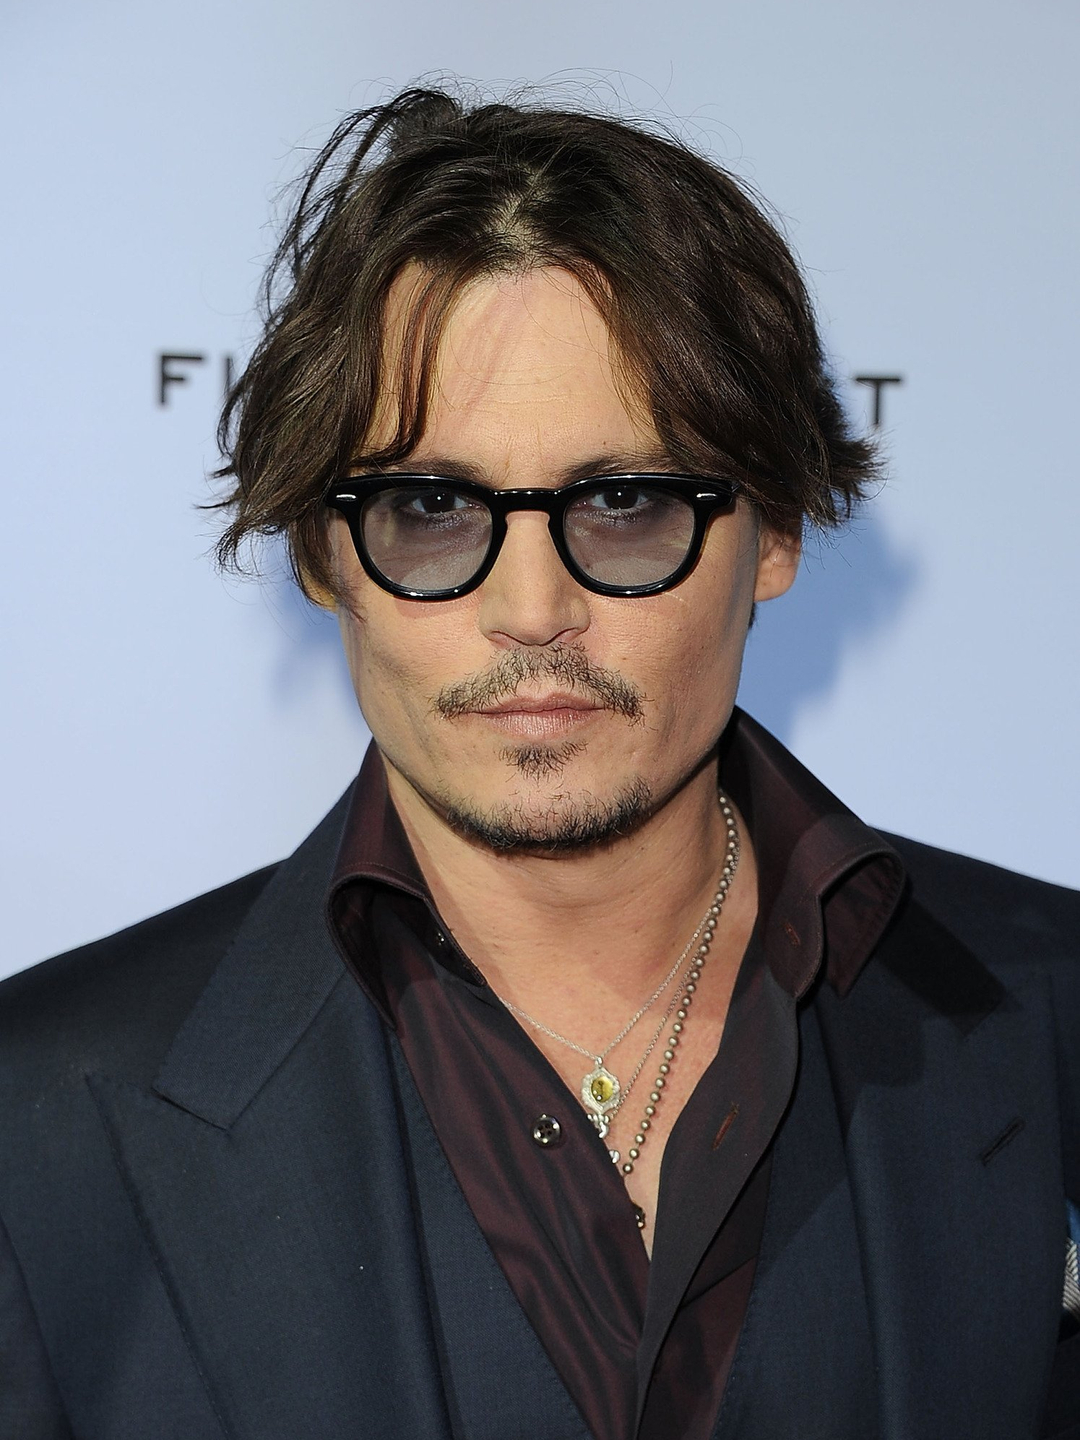 Johnny Depp main achievements